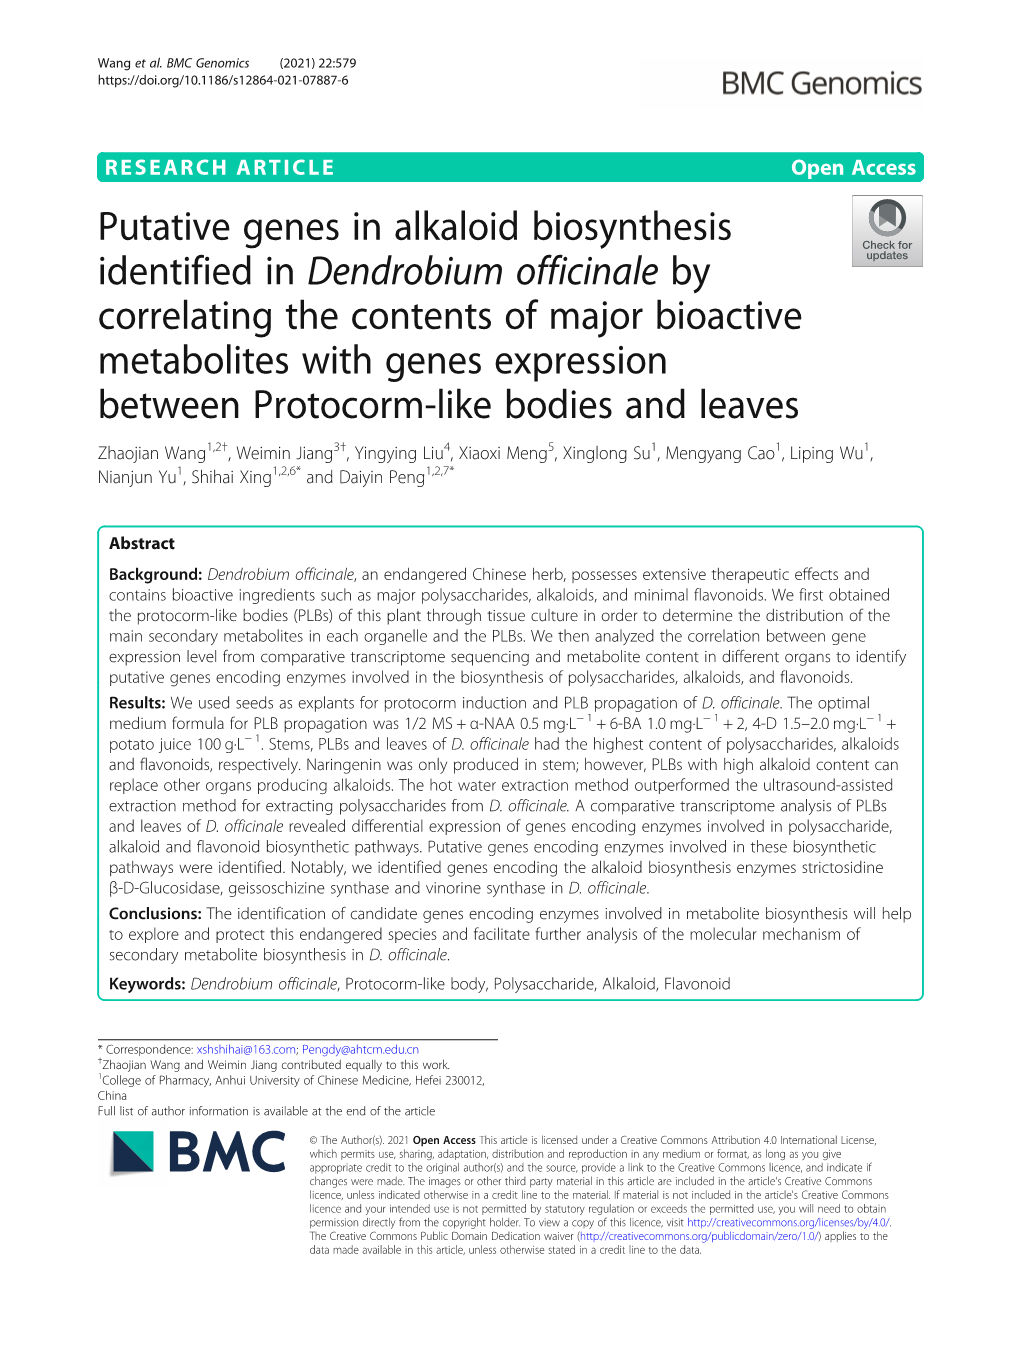 Putative Genes in Alkaloid Biosynthesis